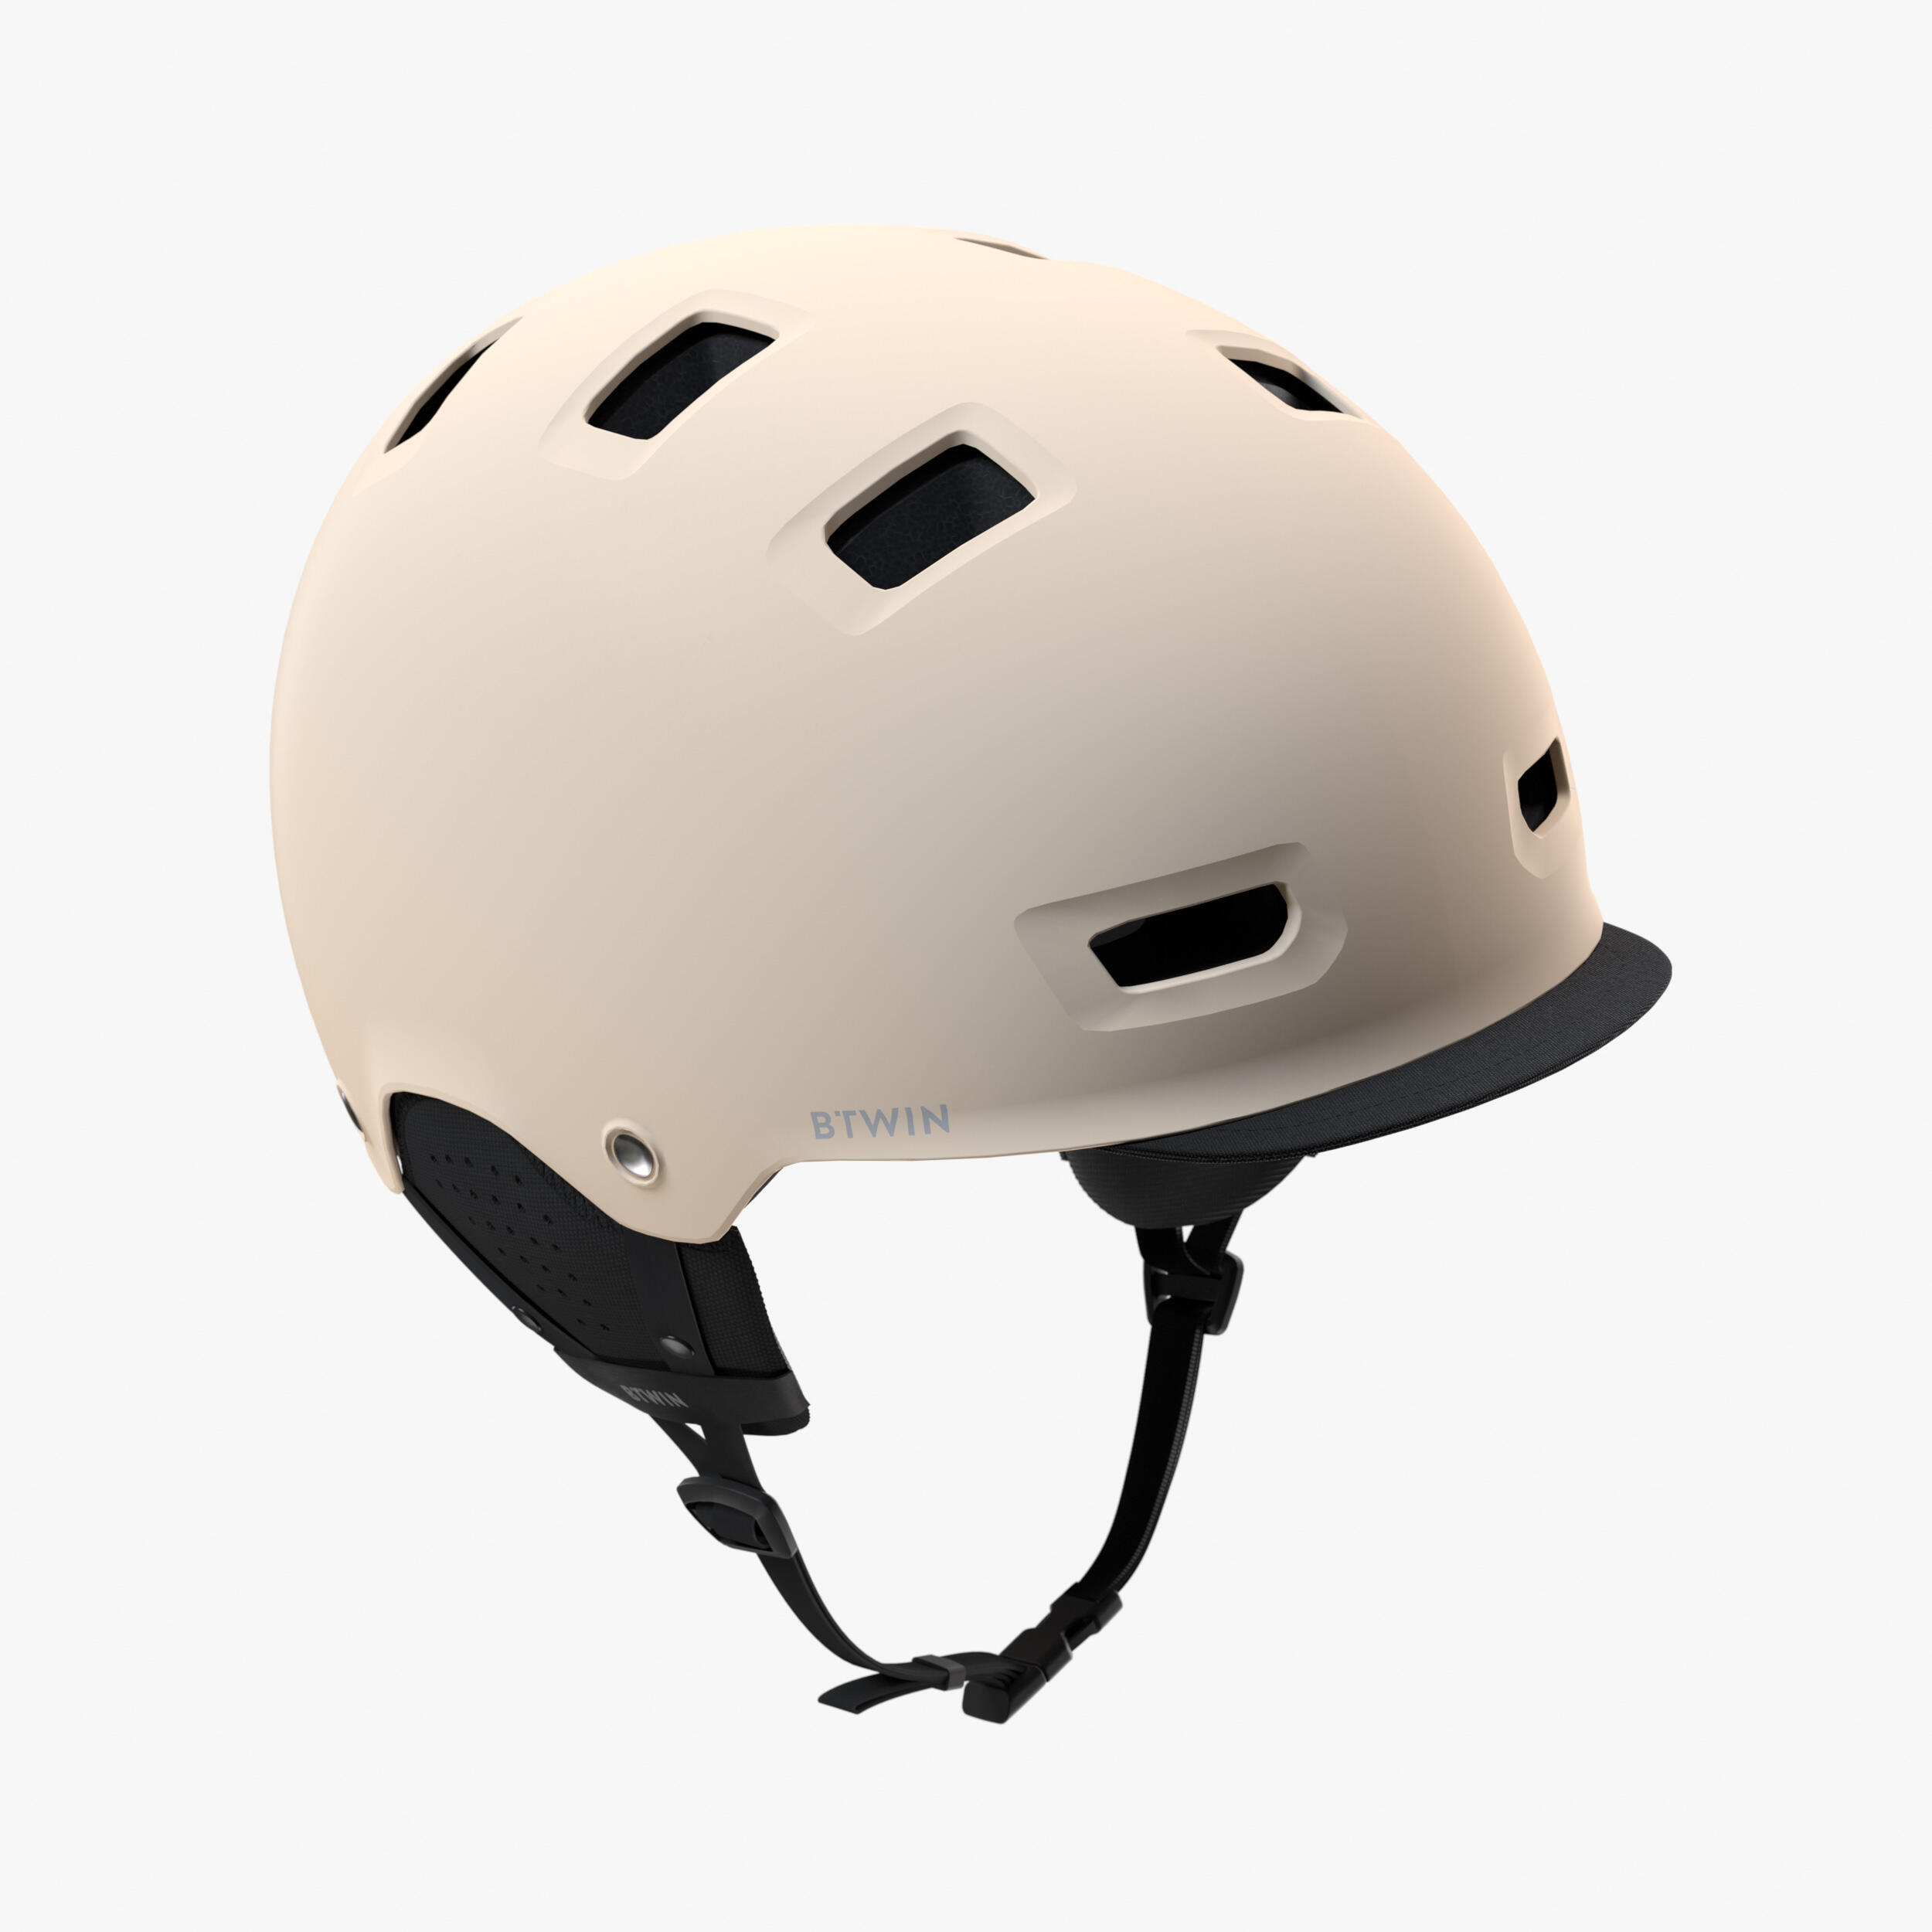 City Cycling Bowl Helmet - 500